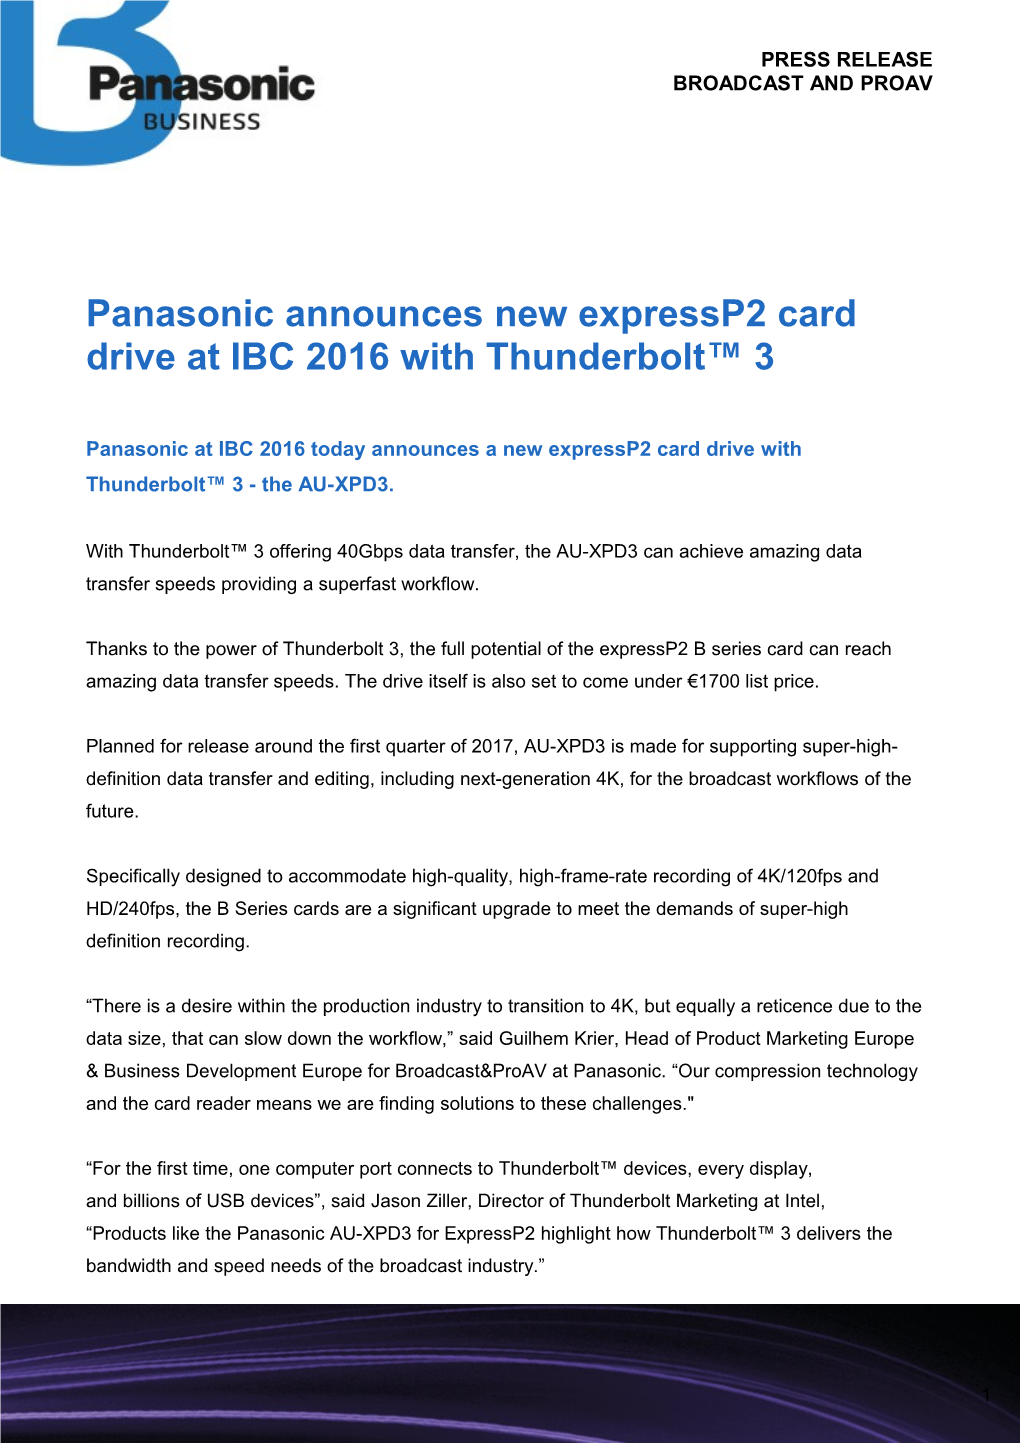 Panasonic Announces New Expressp2 Card Drive at IBC 2016 with Thunderbolt 3